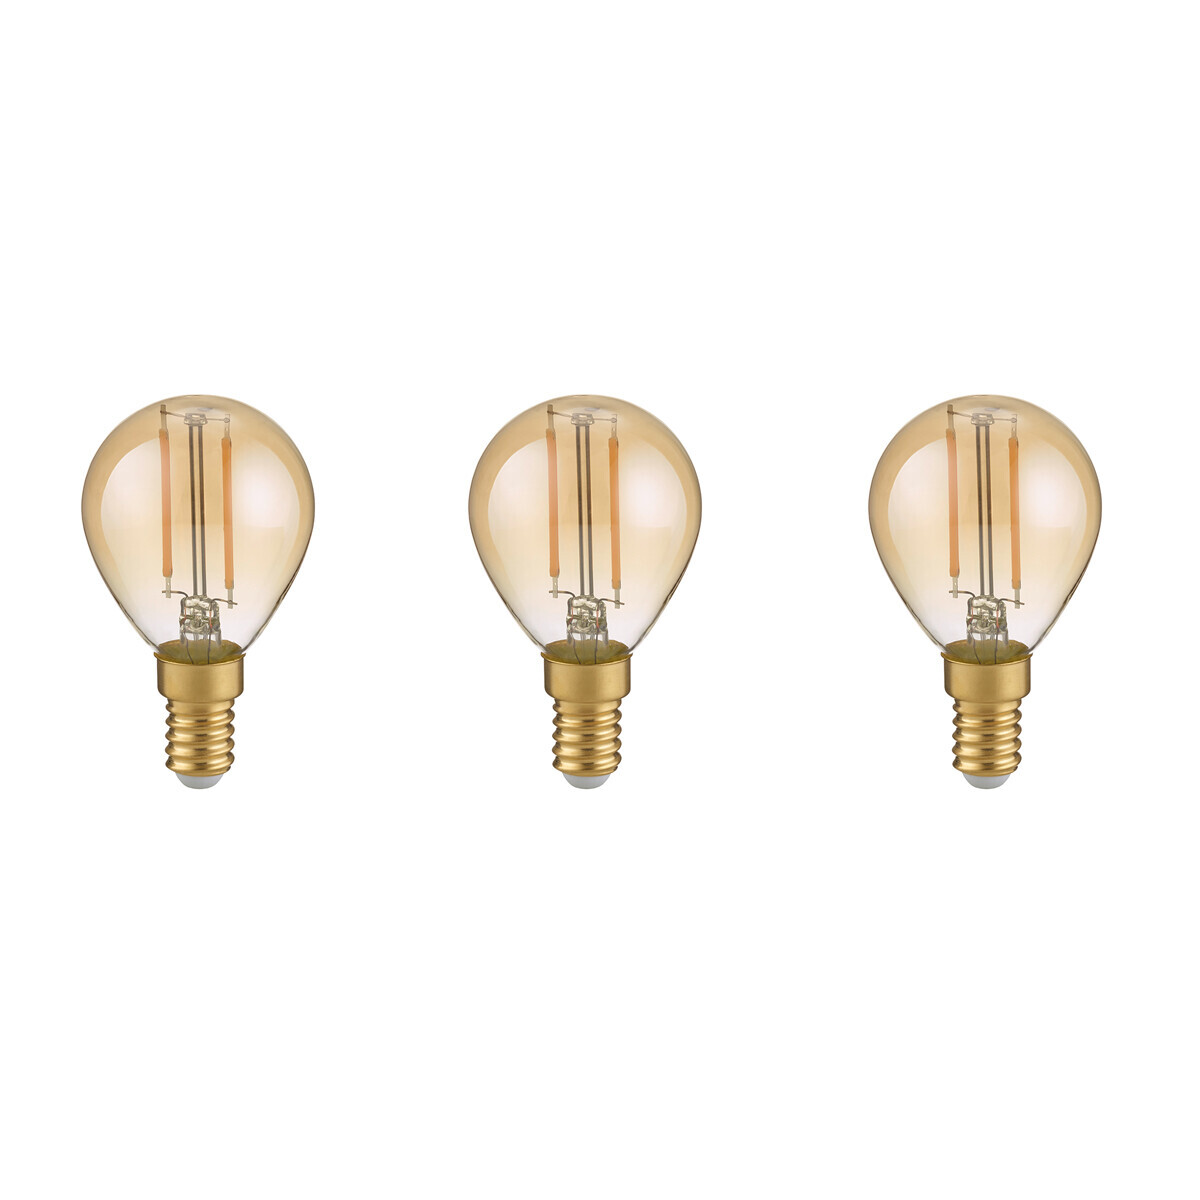 BES LED LED Lamp - Filament - Trion Tropin - Set 3 Stuks - E14 Fitting - 2W - Warm Wit-2700K - Amber - Glas